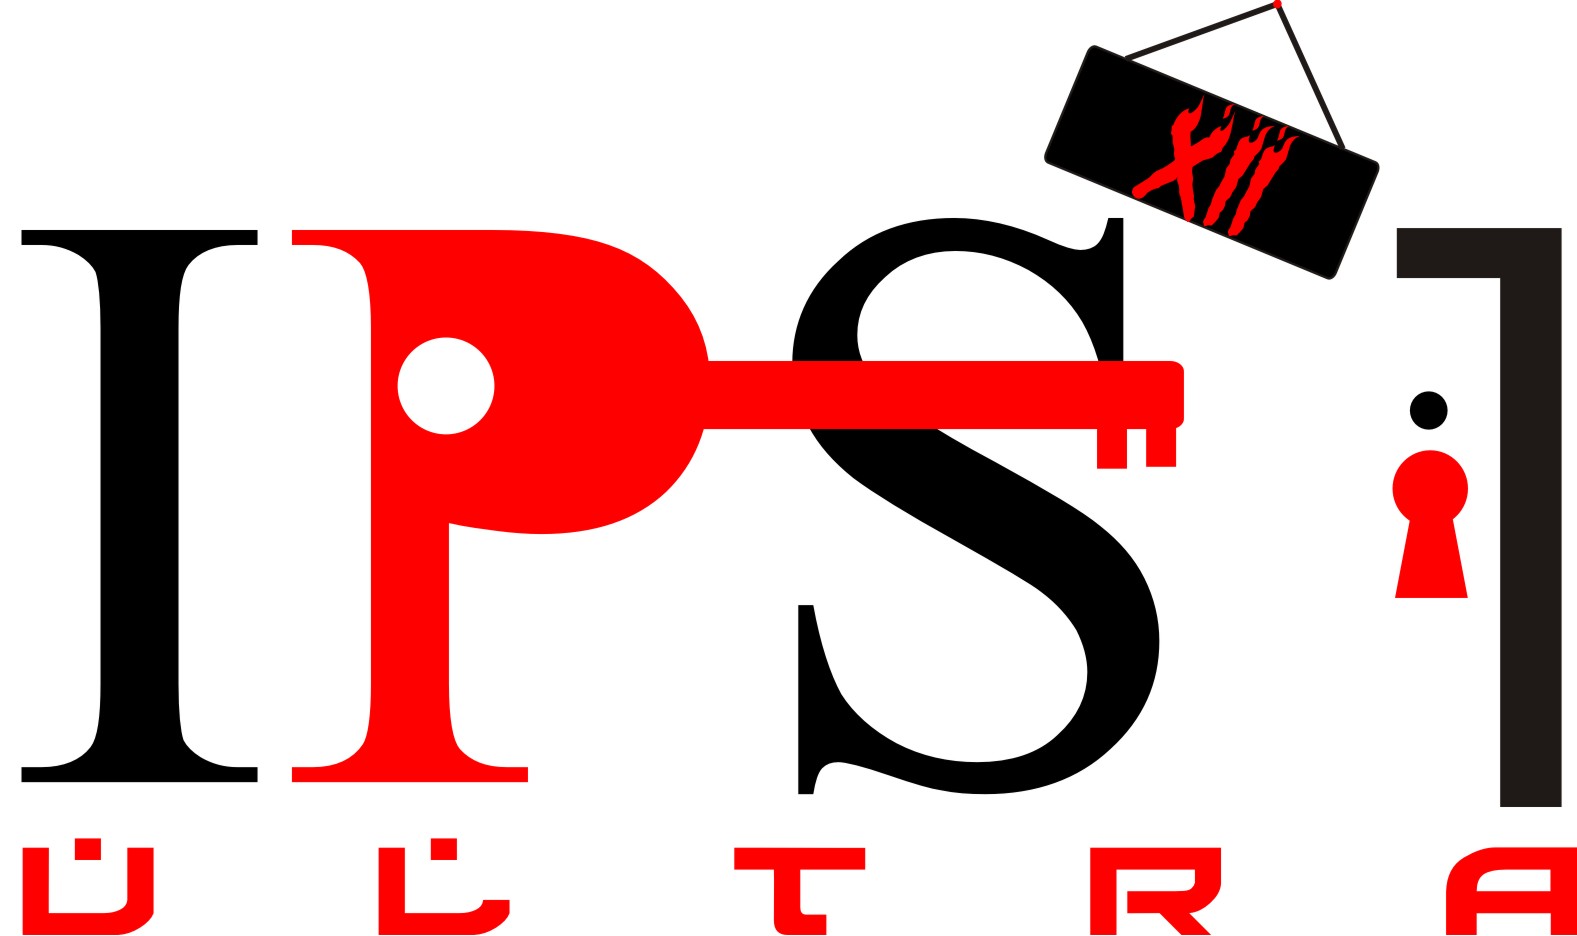  Logo Kelas Ips 4 Keren